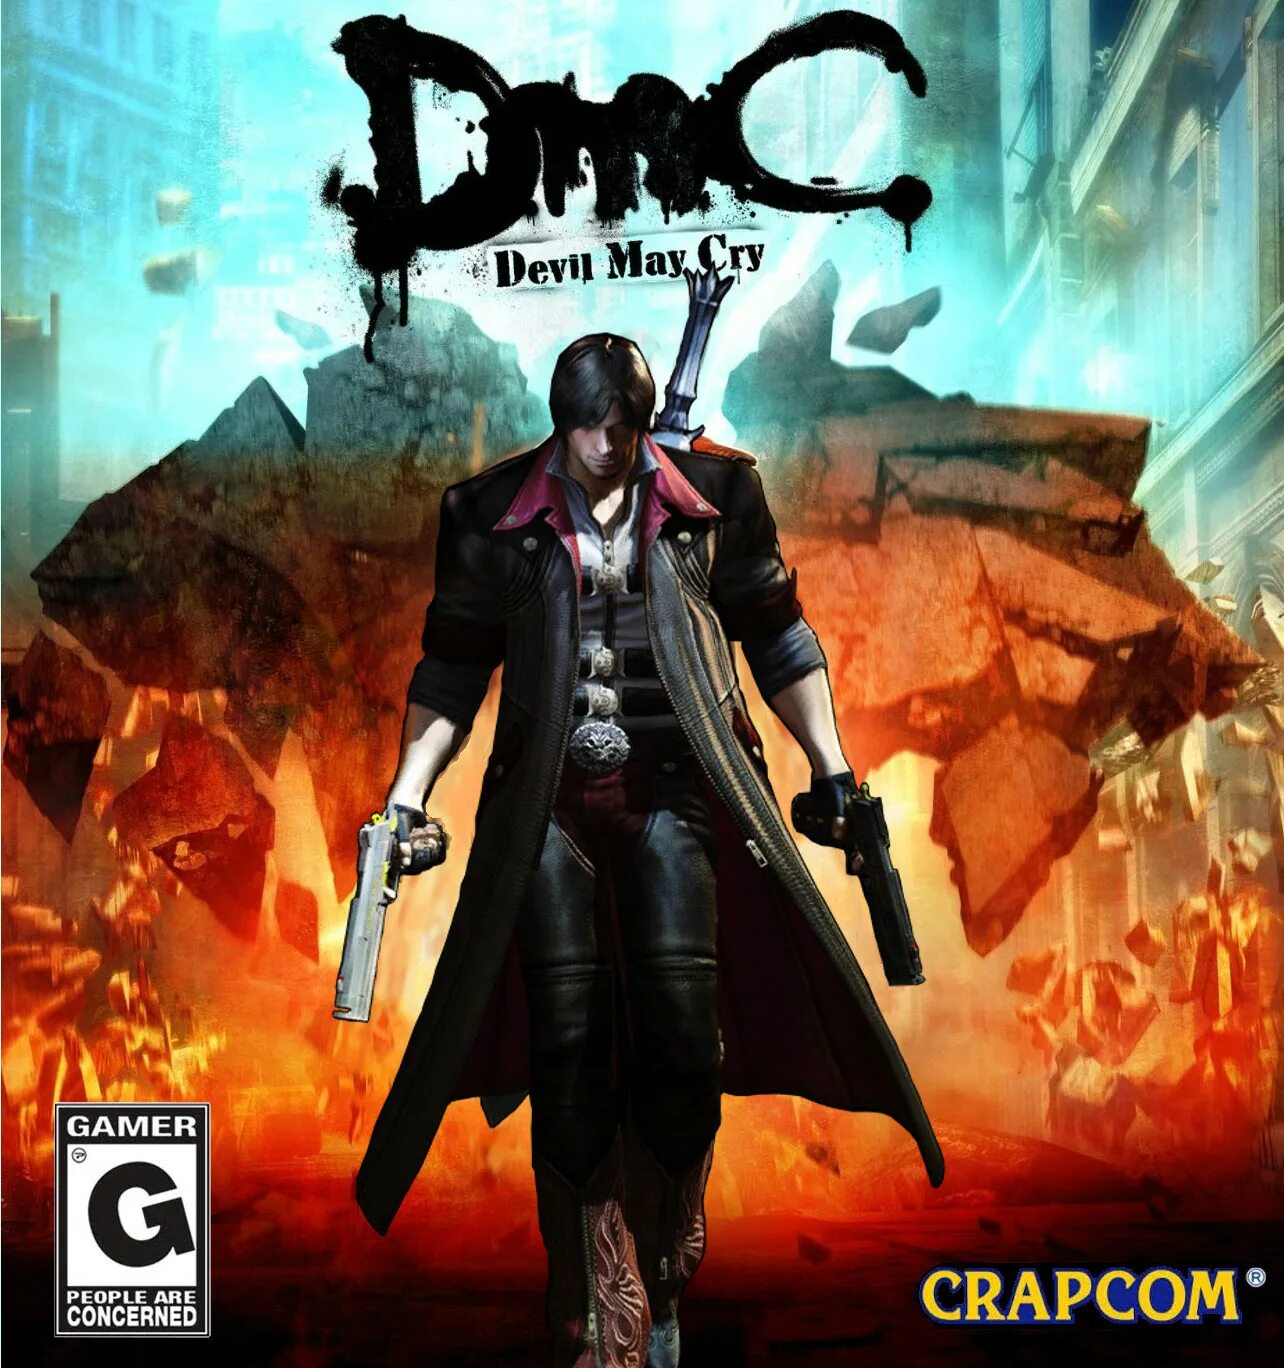 DMC: Devil May Cry. Definitive Edition. Devil my Cry Definitive Edition. Devil May Cry DMC Definitive.